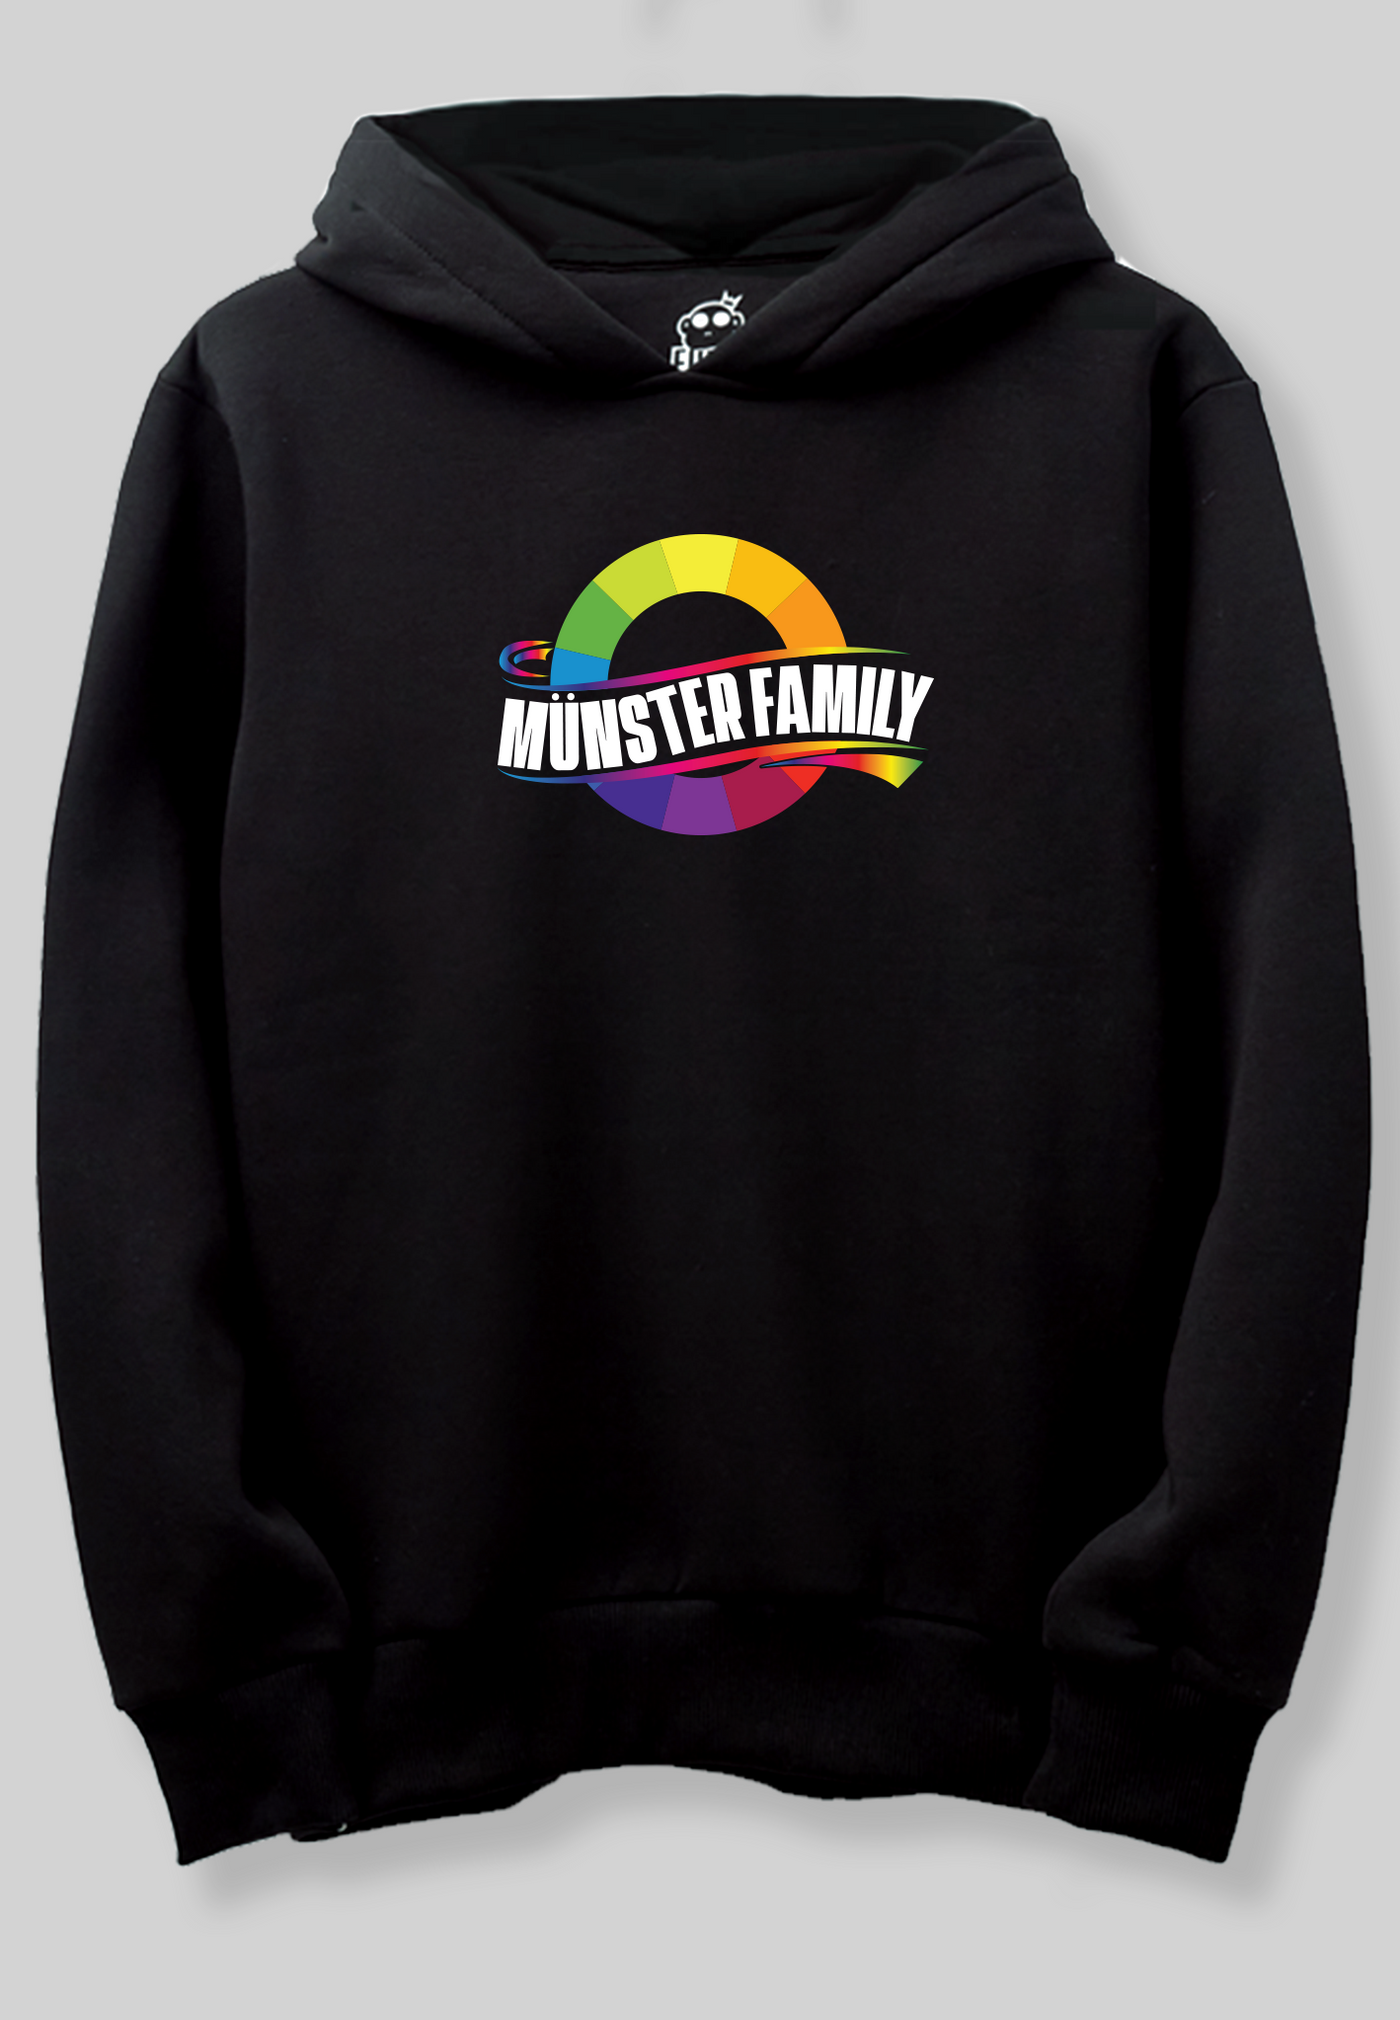 Familien Münster - Stor logo - Sort hoodie